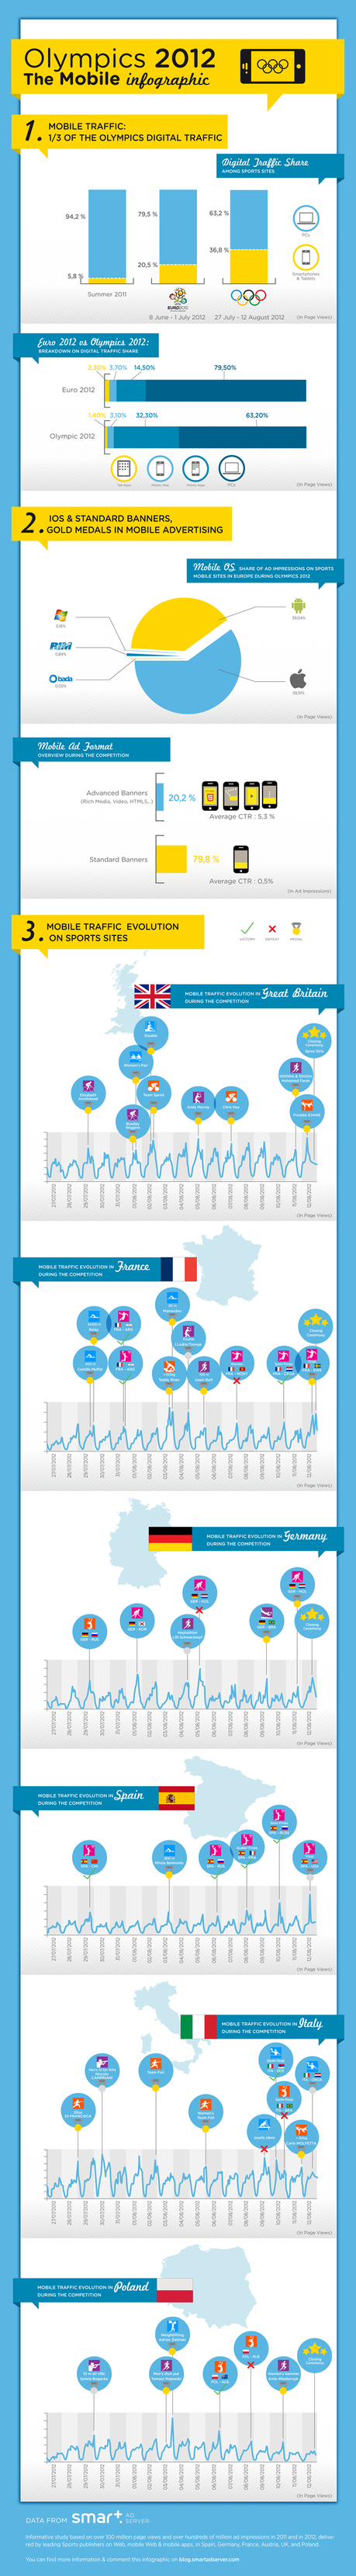 London Olympics 2012: The impressive Mobile Infographic